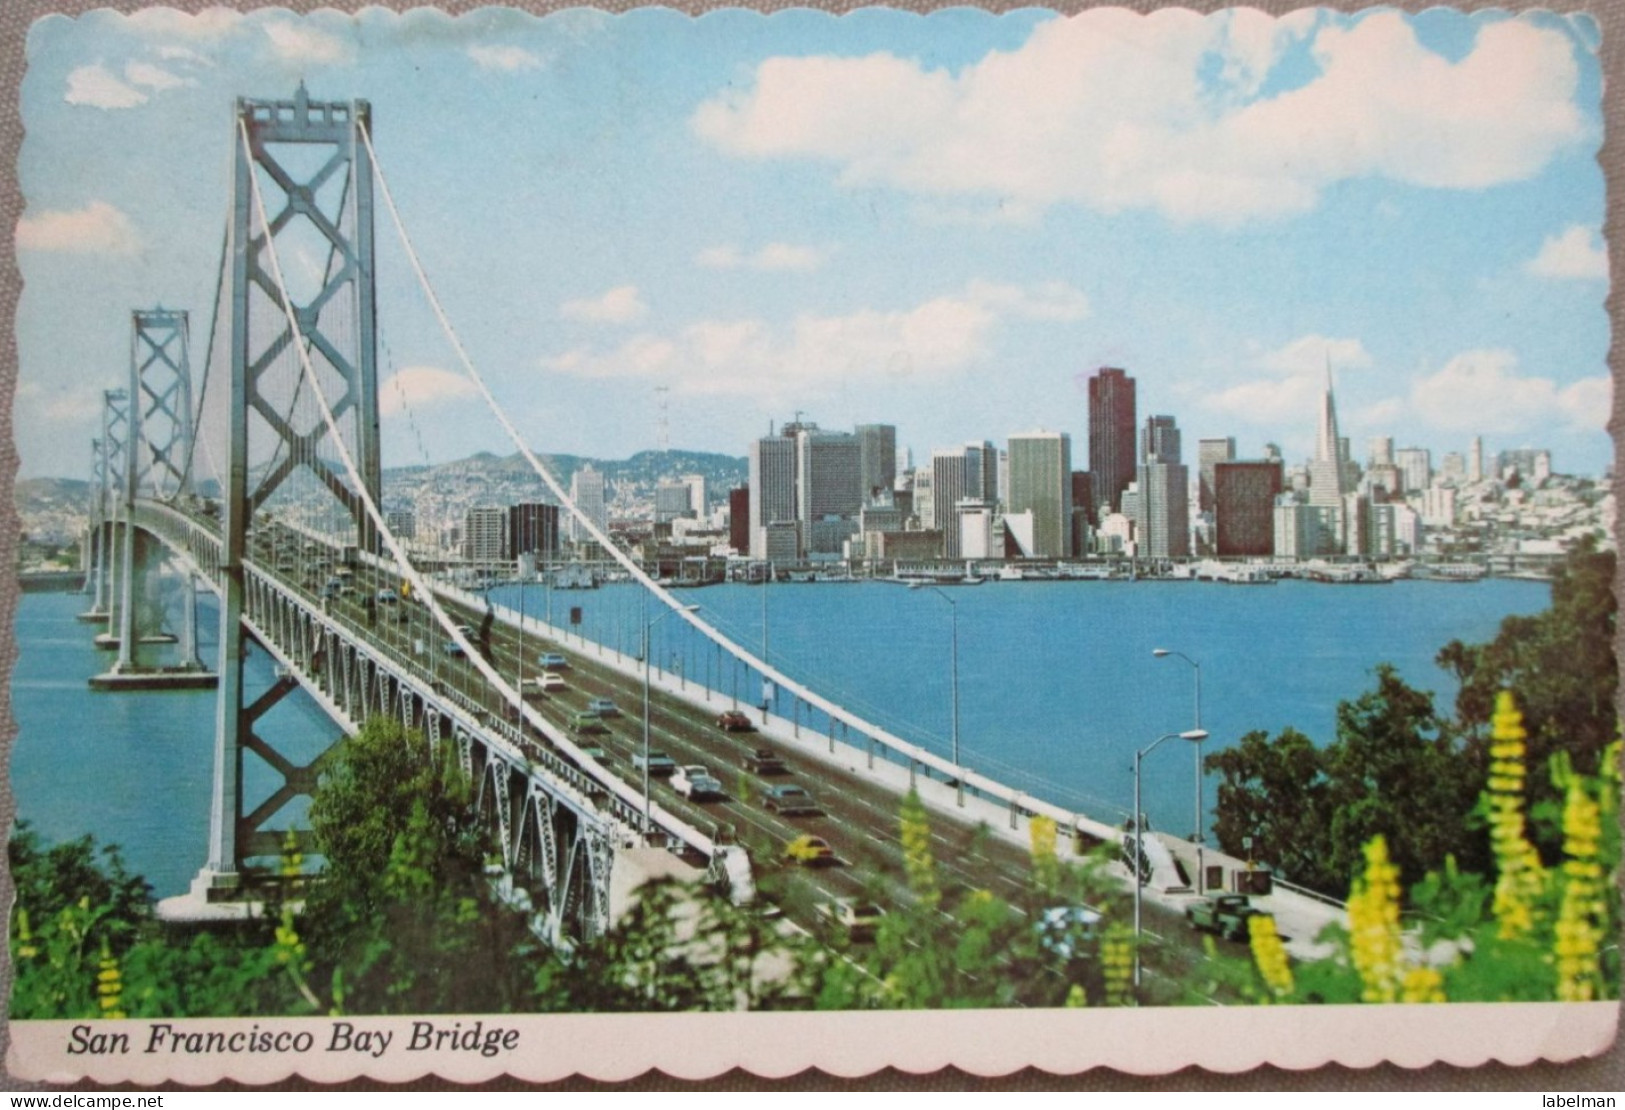 USA CALIFORNIA SAN FRANCISCO BAY BRIDGE YERBA BUENA KARTE CARD POSTCARD CARTE POSTALE POSTKARTE CARTOLINA ANSICHTSKARTE - Long Beach